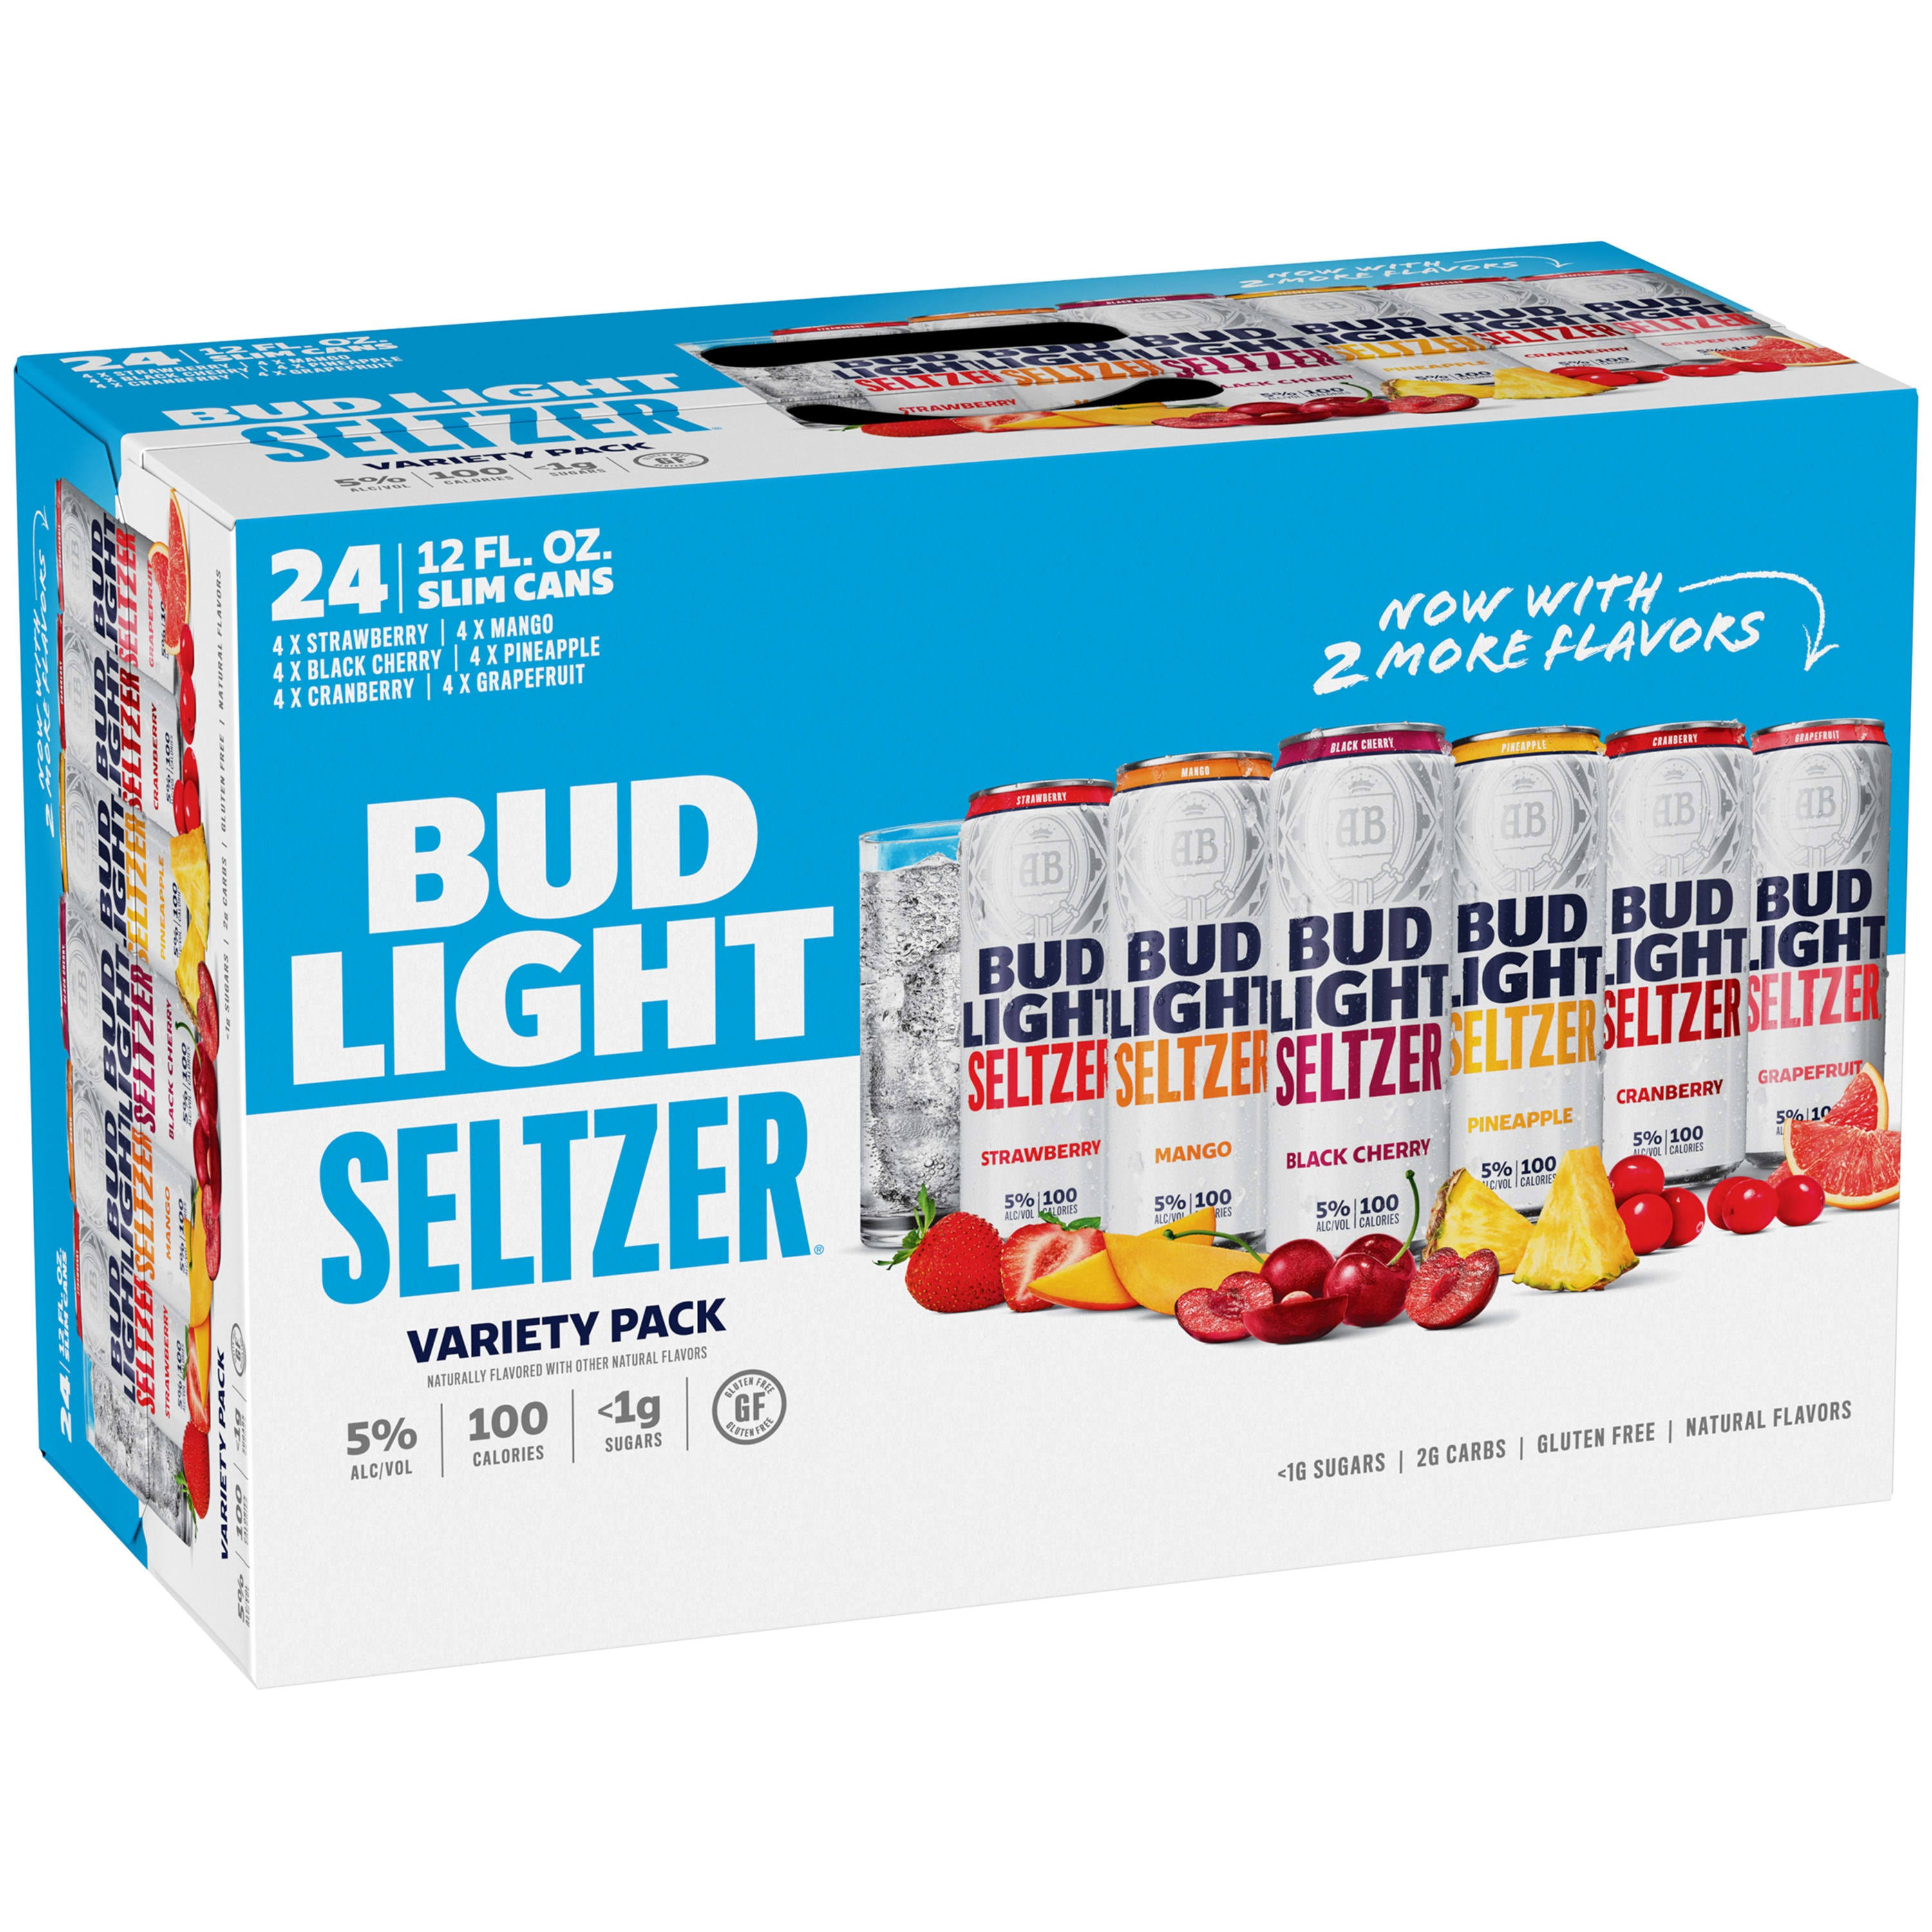 Bud Light Seltzer, Variety Pack - 12 pack, 12 fl oz cans